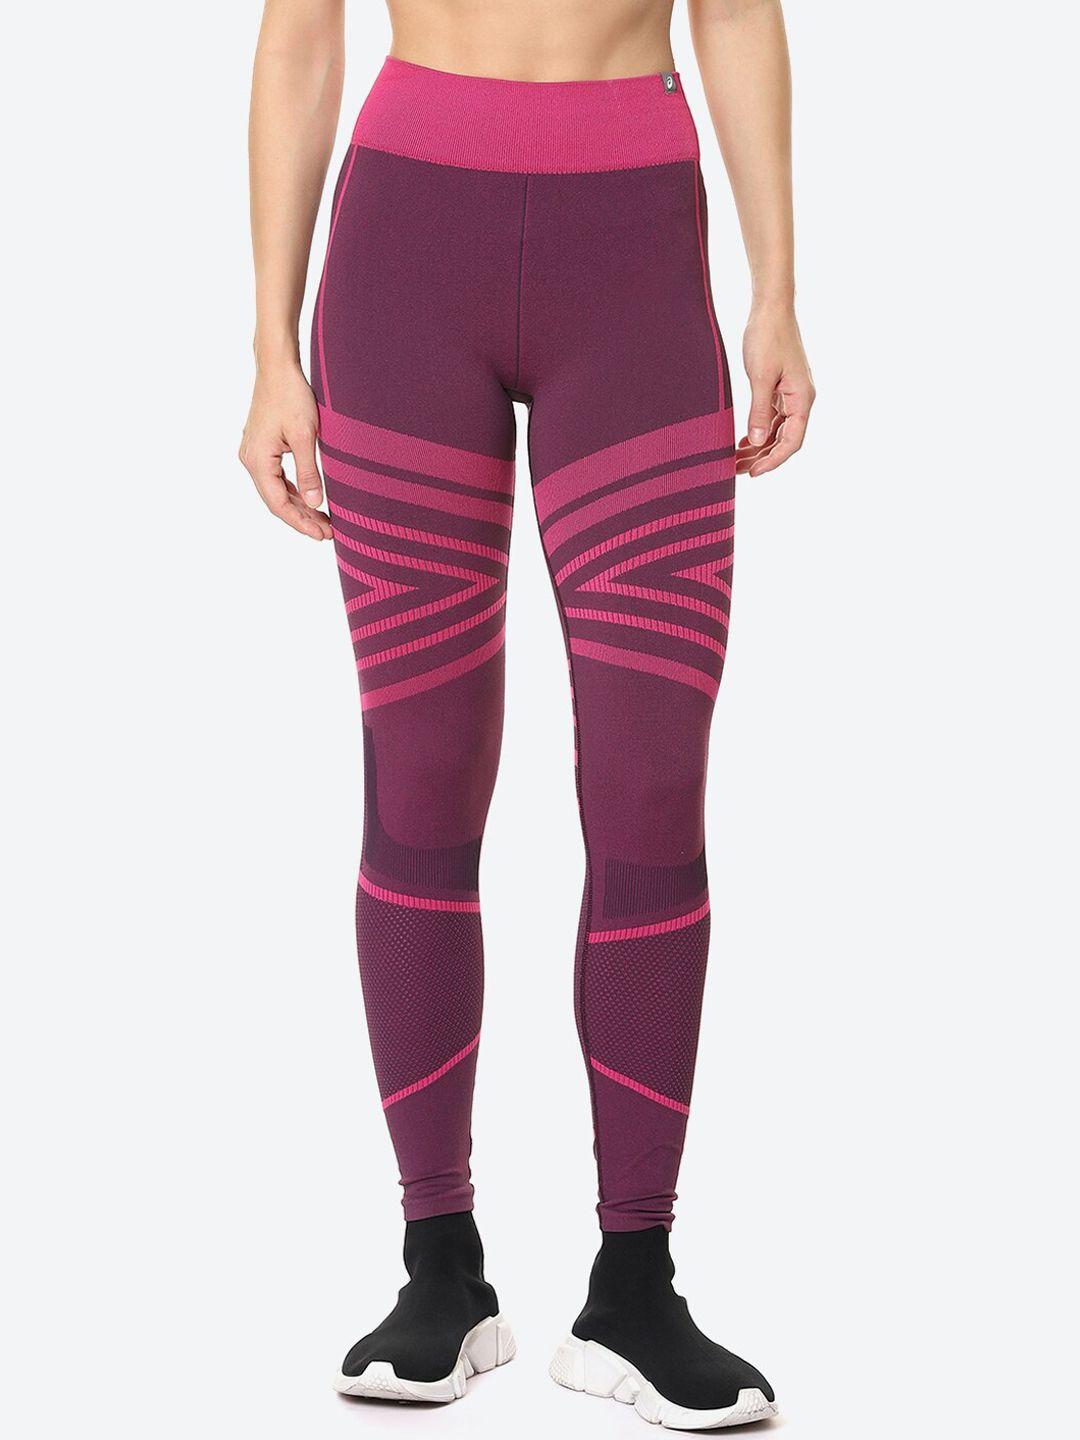 asics-women-purple-&-pink-printed-woseamless-tights